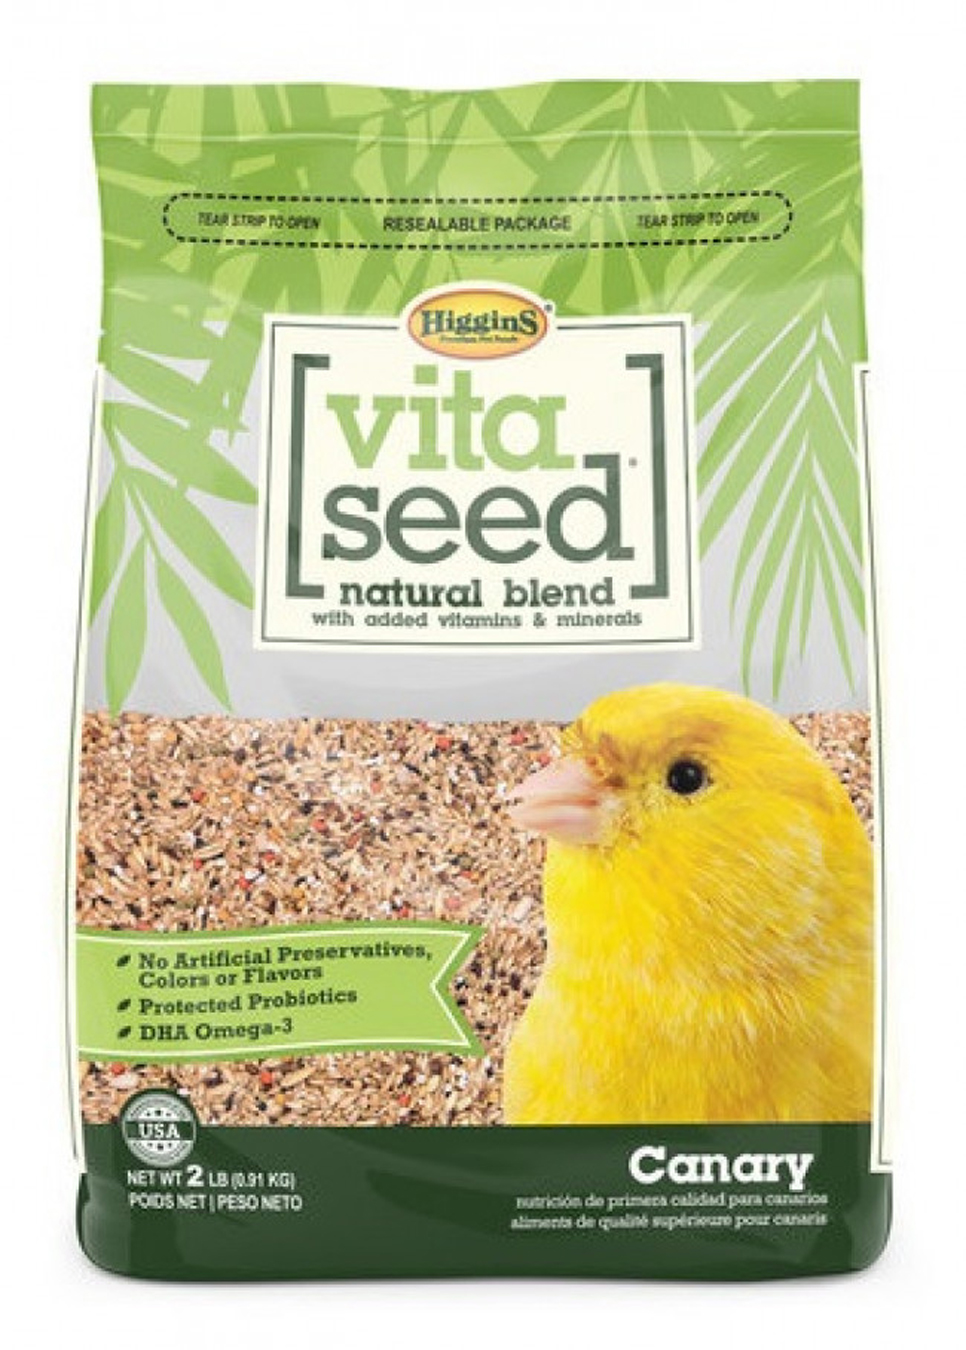 Higgins Vita Seed Canary 2Lbs 0.907 Kg